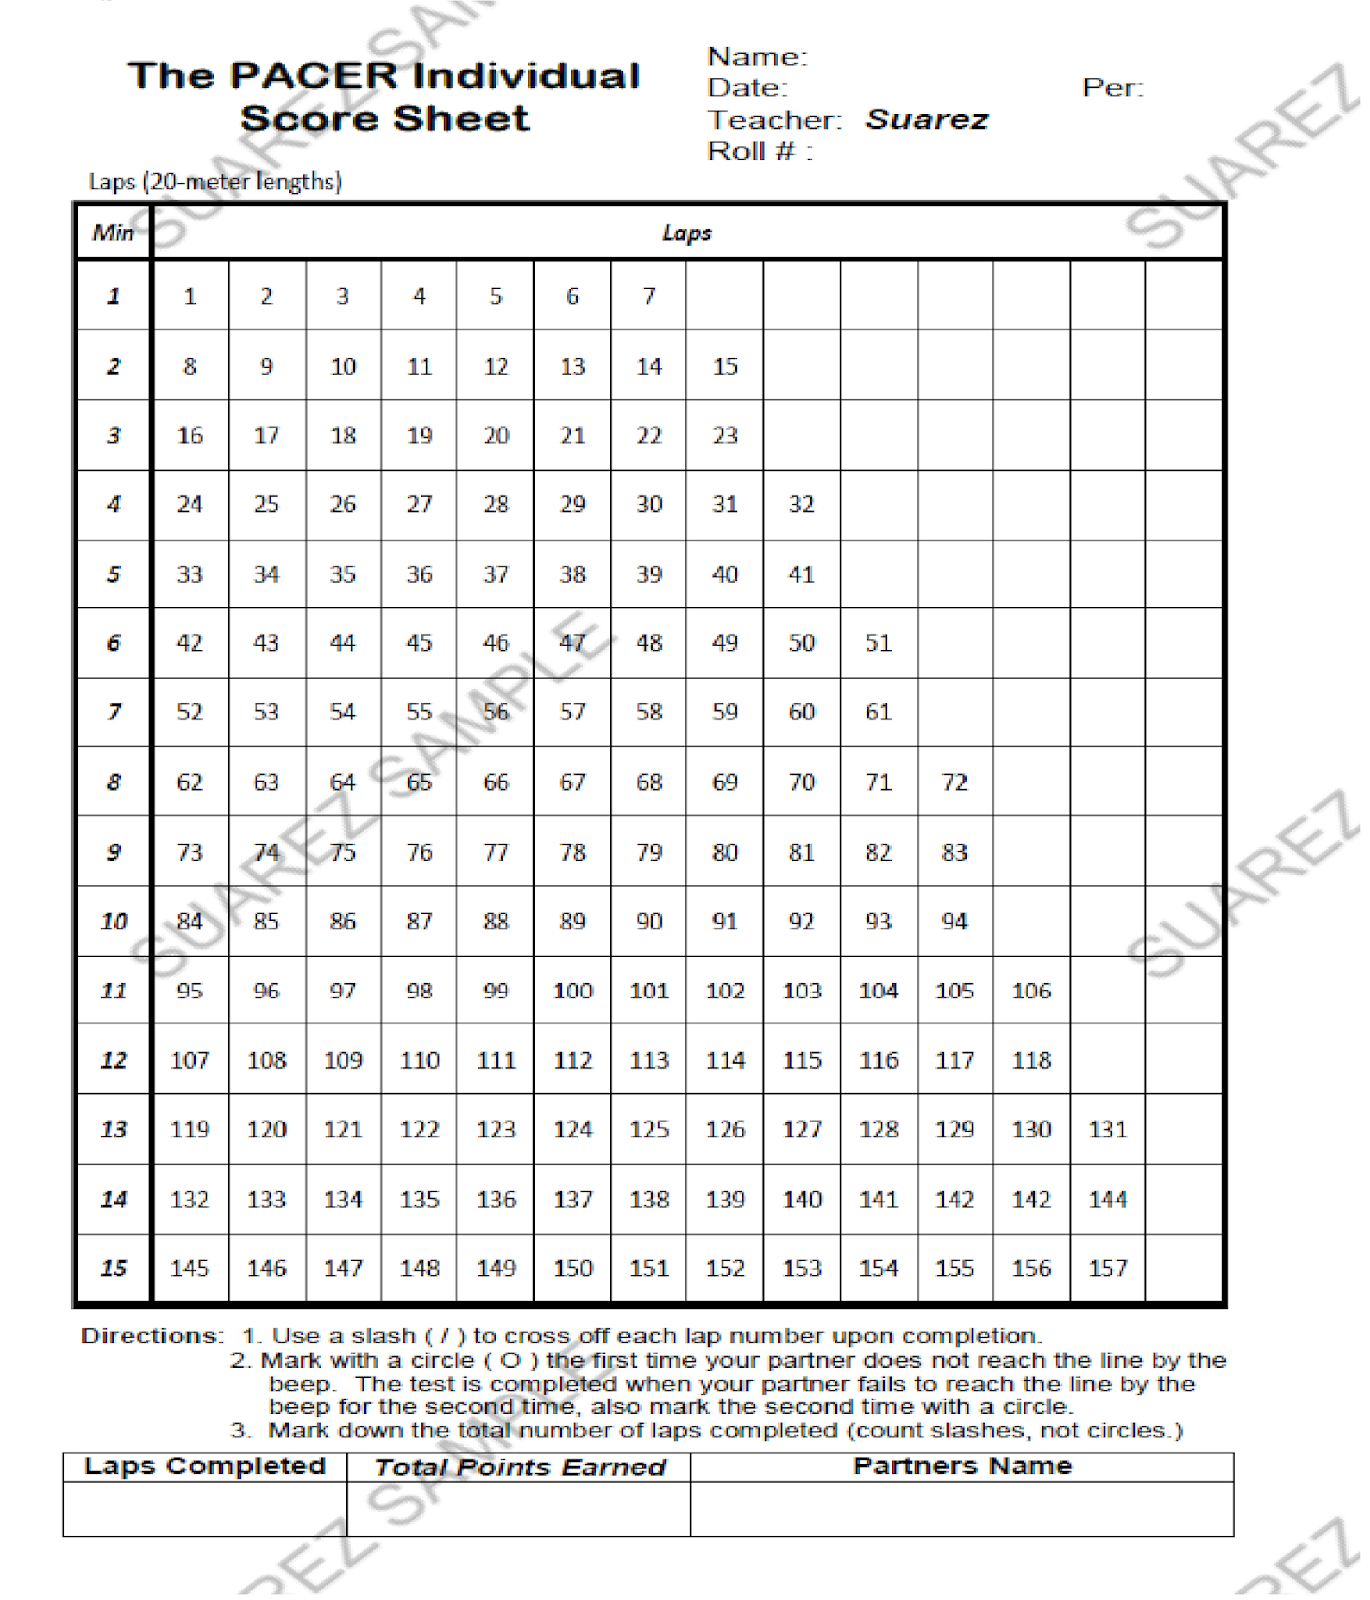 mr-suarez-s-physical-education-blog-sample-pacer-individual-score-sheet